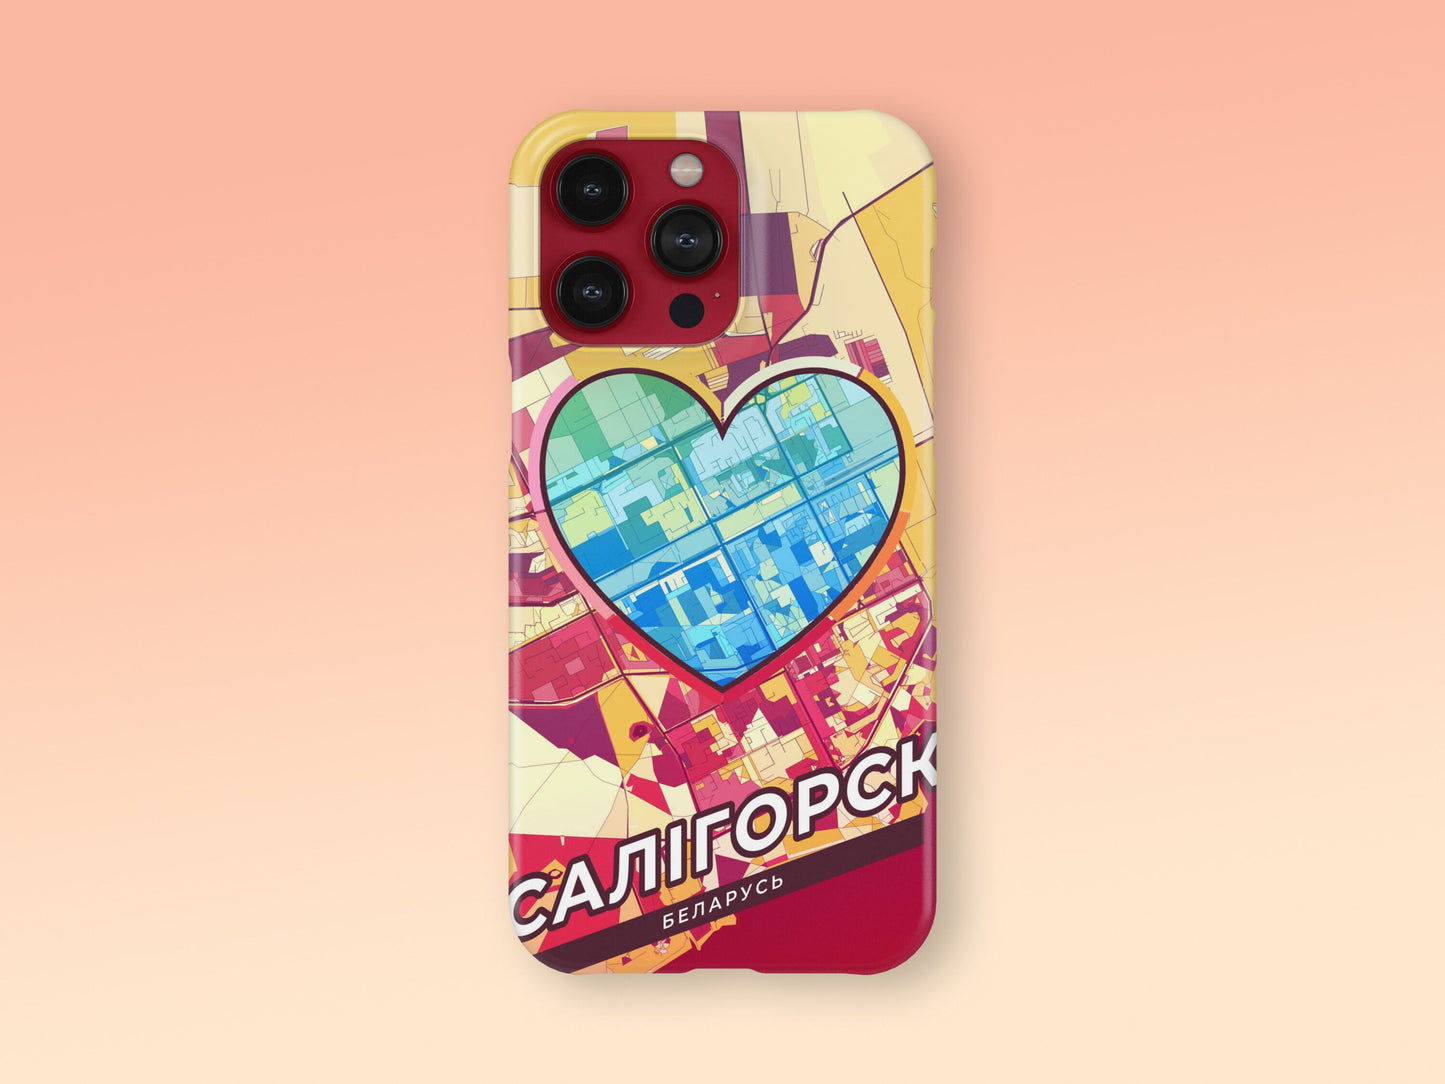 Салігорск Беларусь slim phone case with colorful icon. Birthday, wedding or housewarming gift. Couple match cases. 2